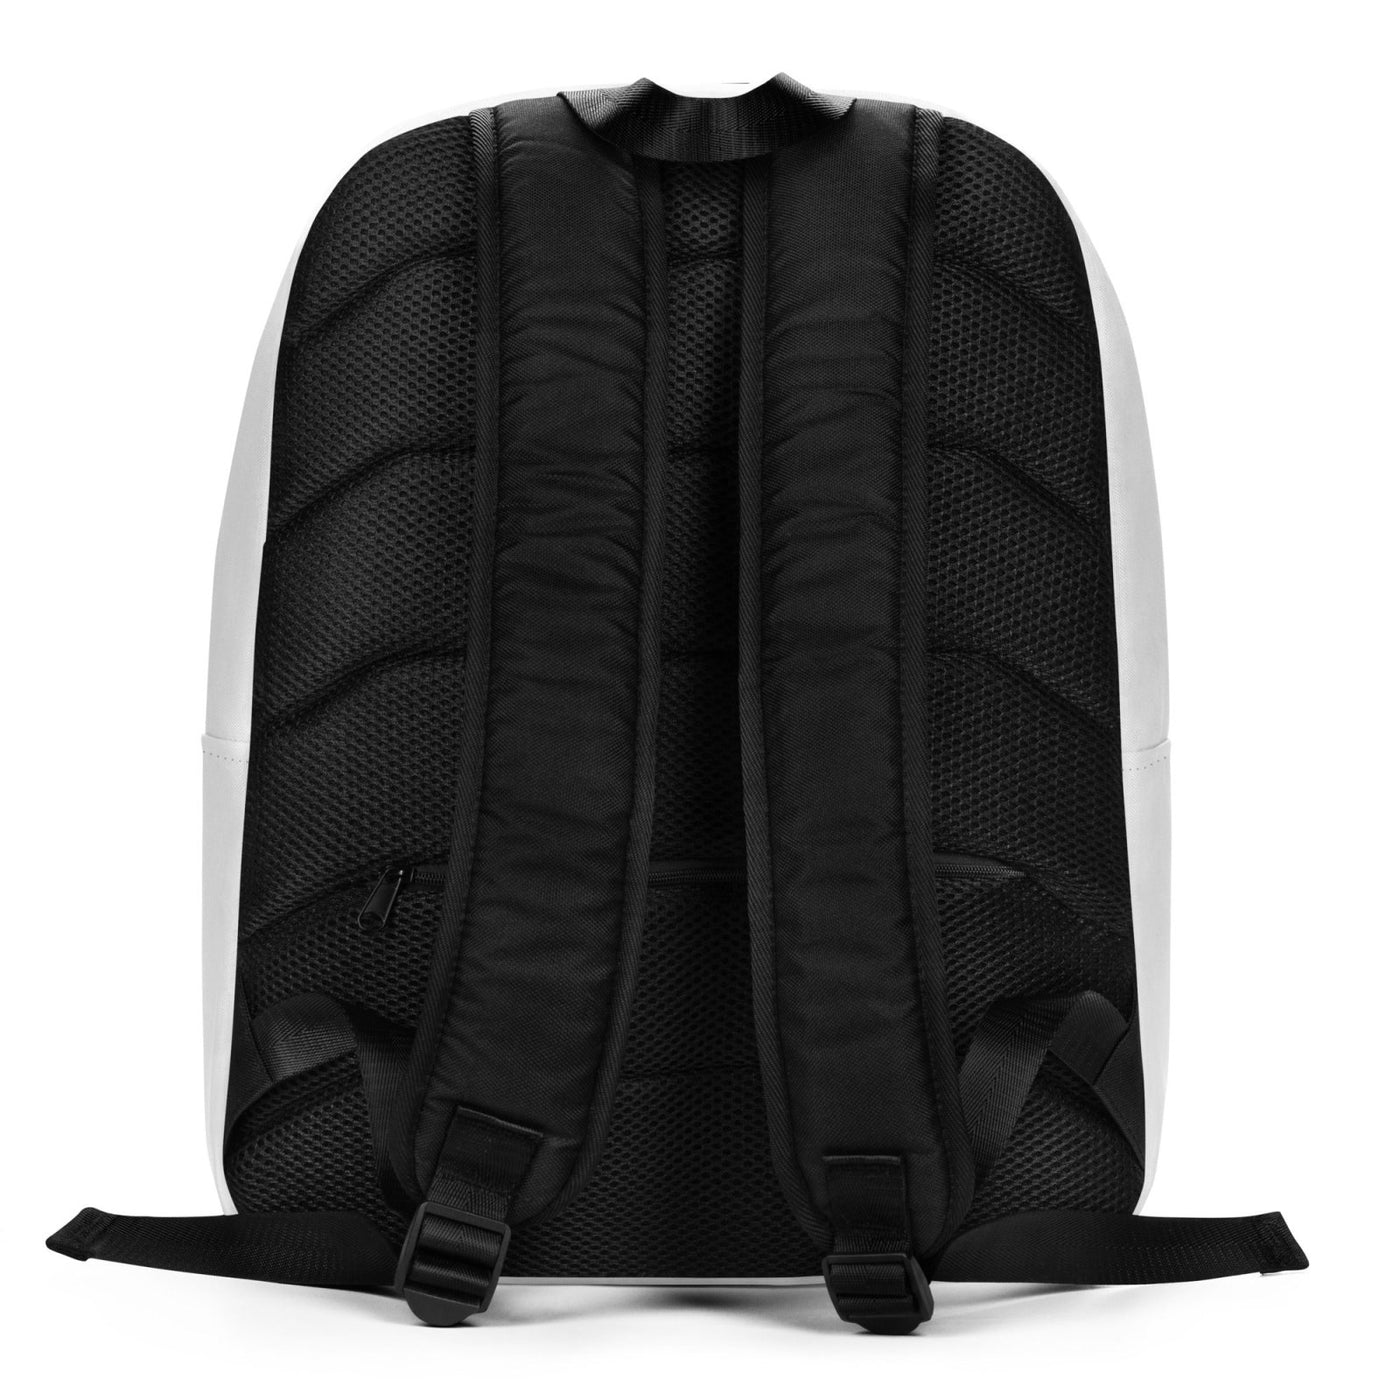 Mindhoney® Minimalist Backpack